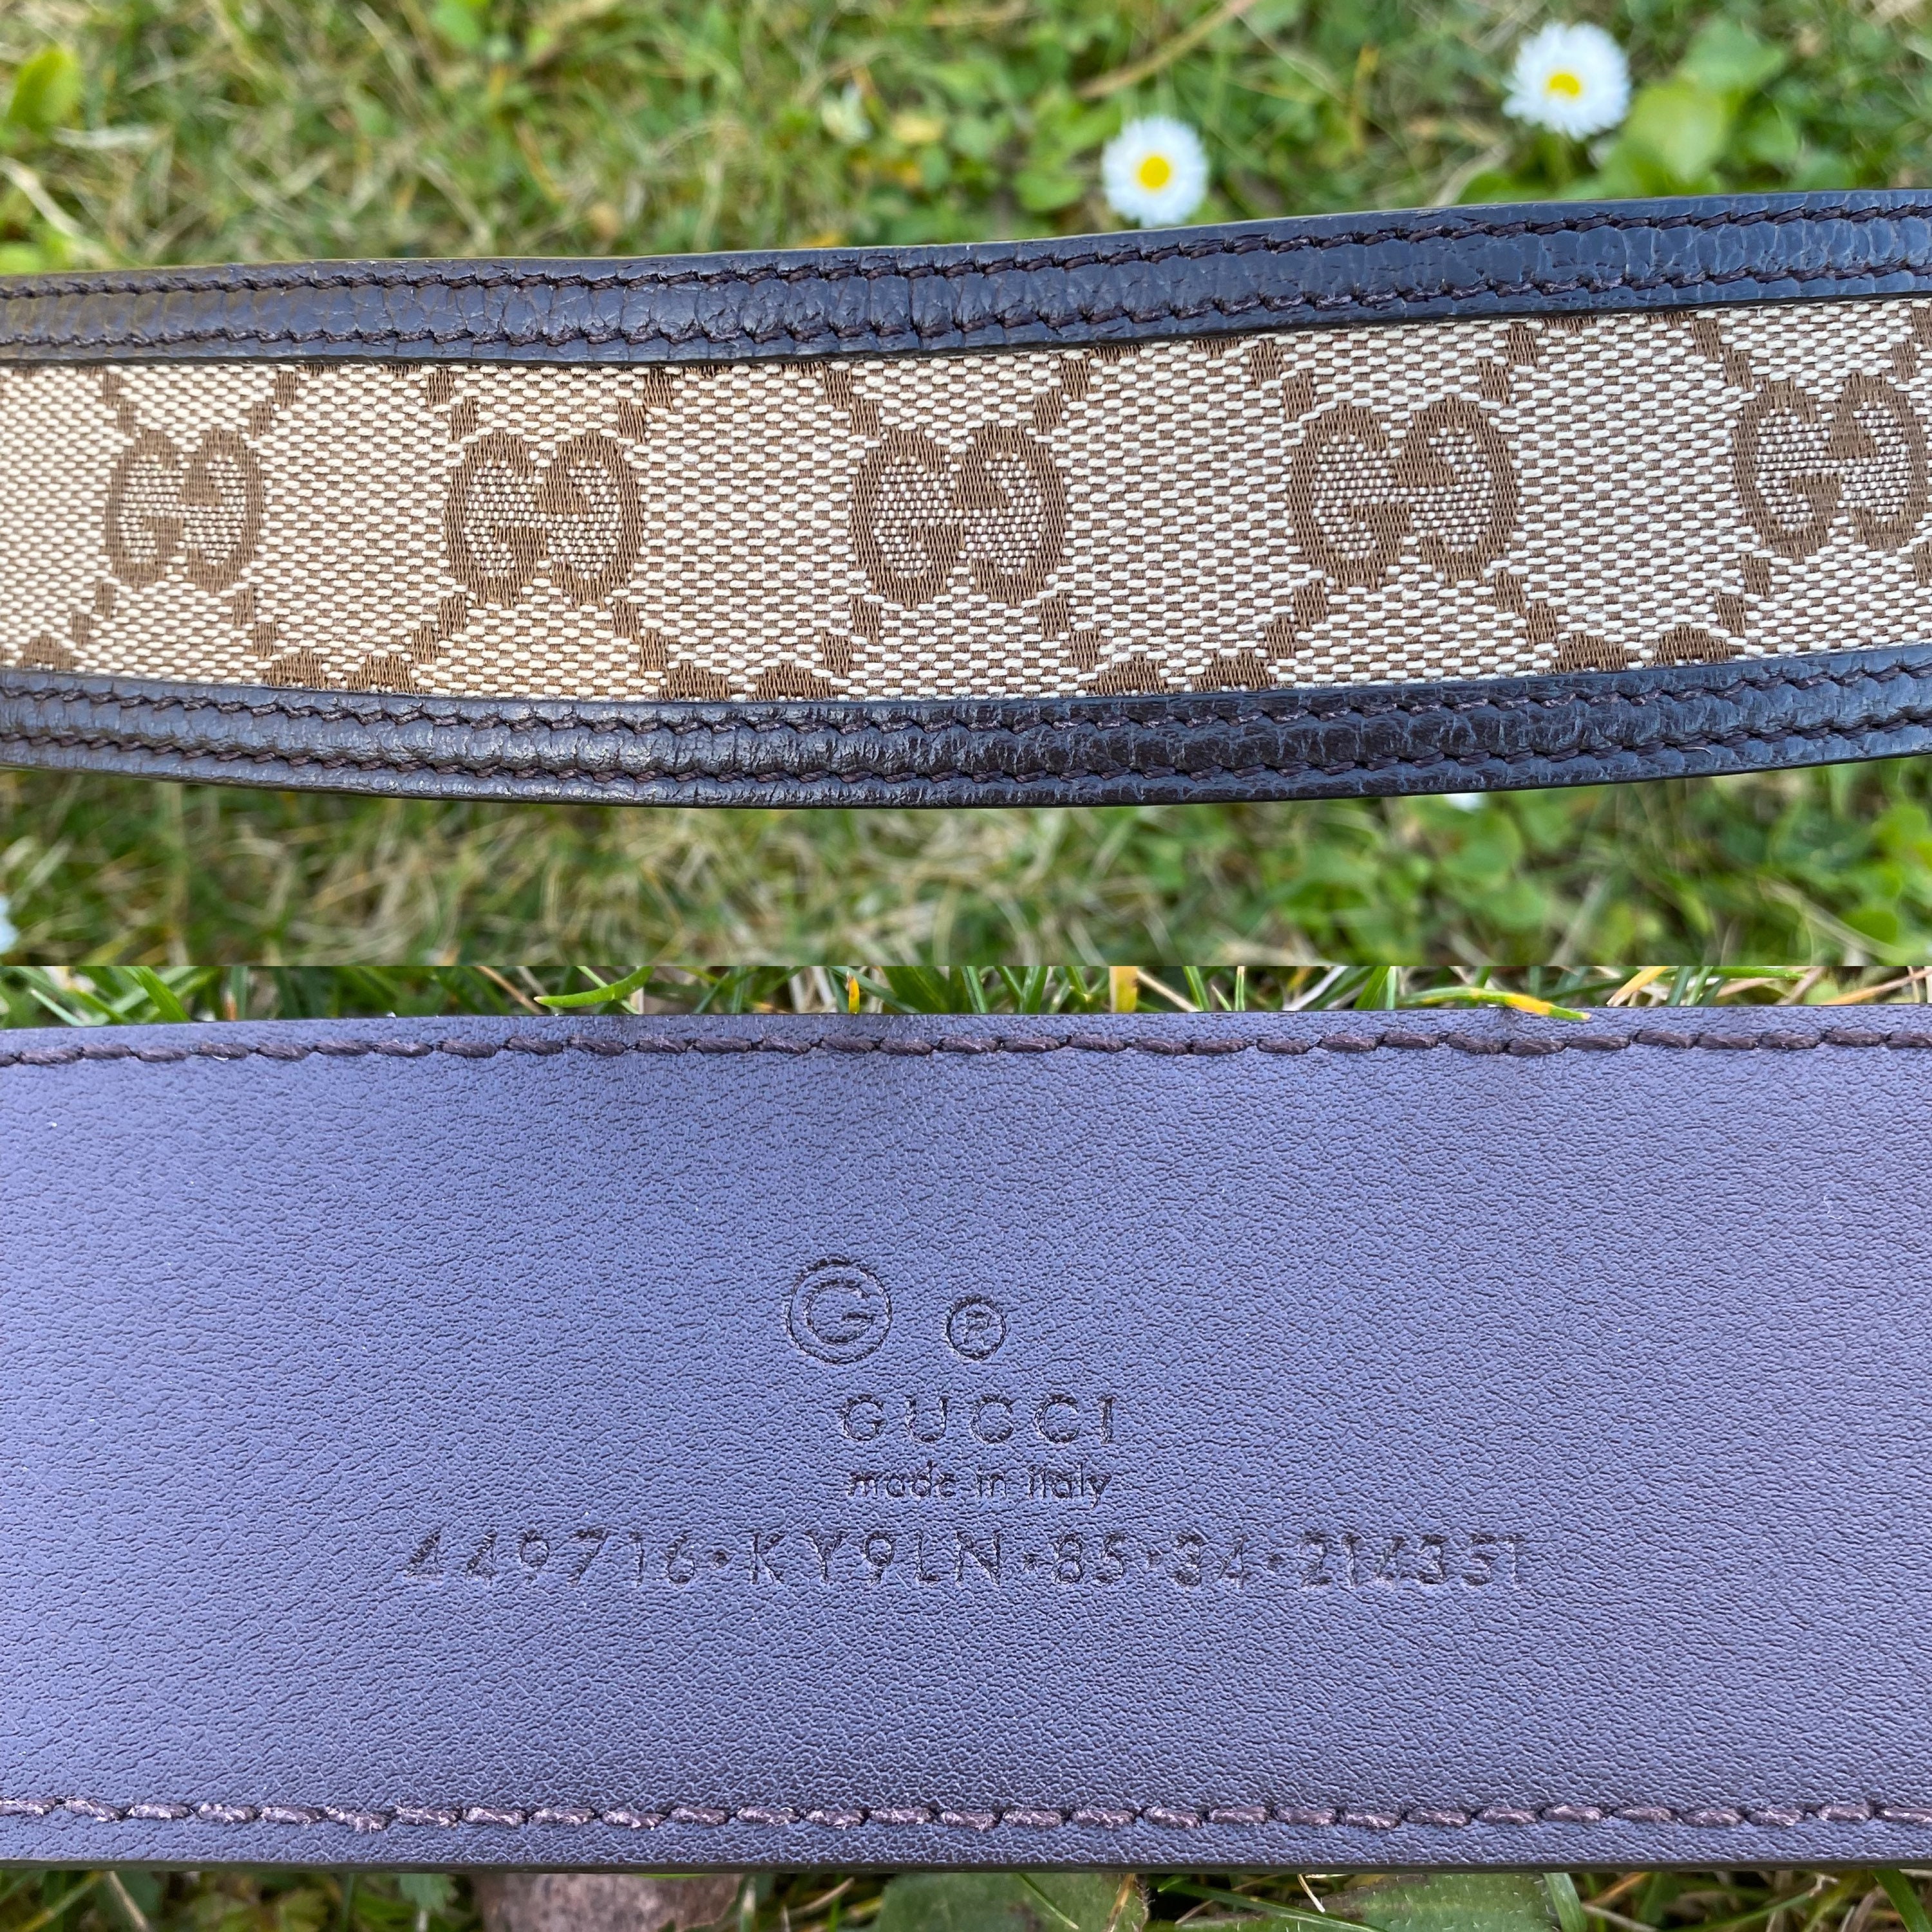 Vintage Authentic Belt Gucci Monogram/brown Beige Belt Leather 